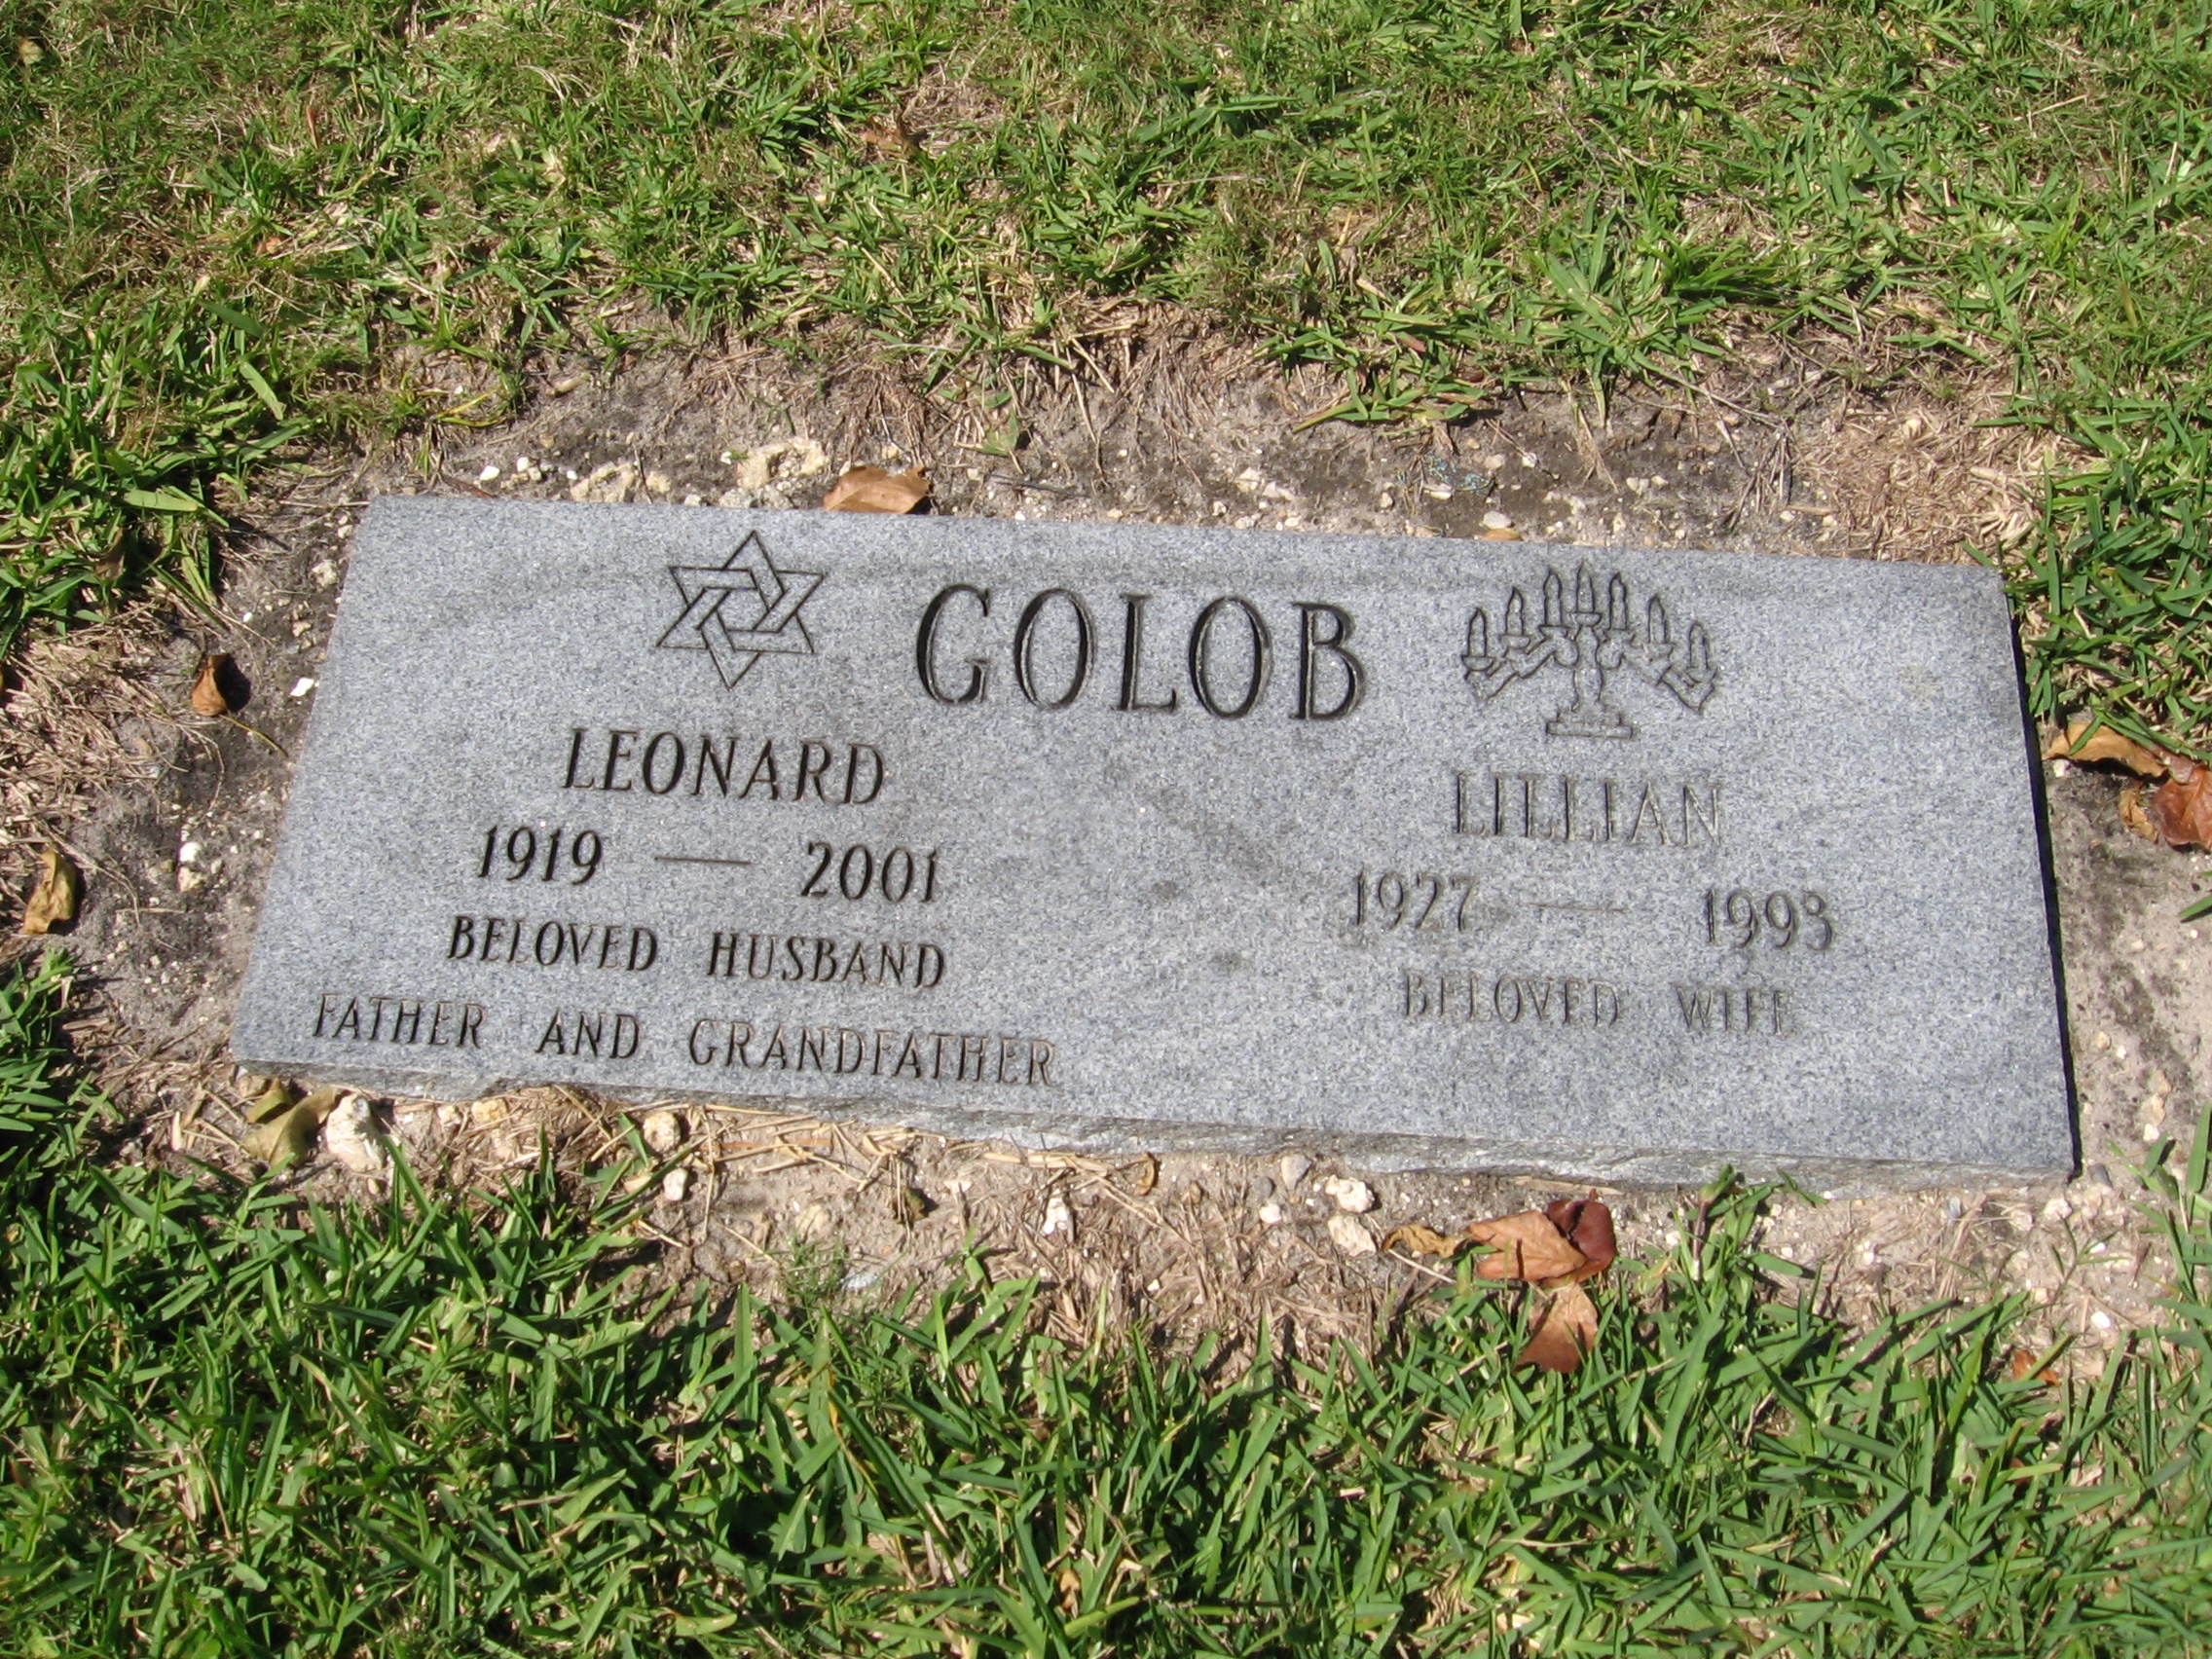 Leonard Golob